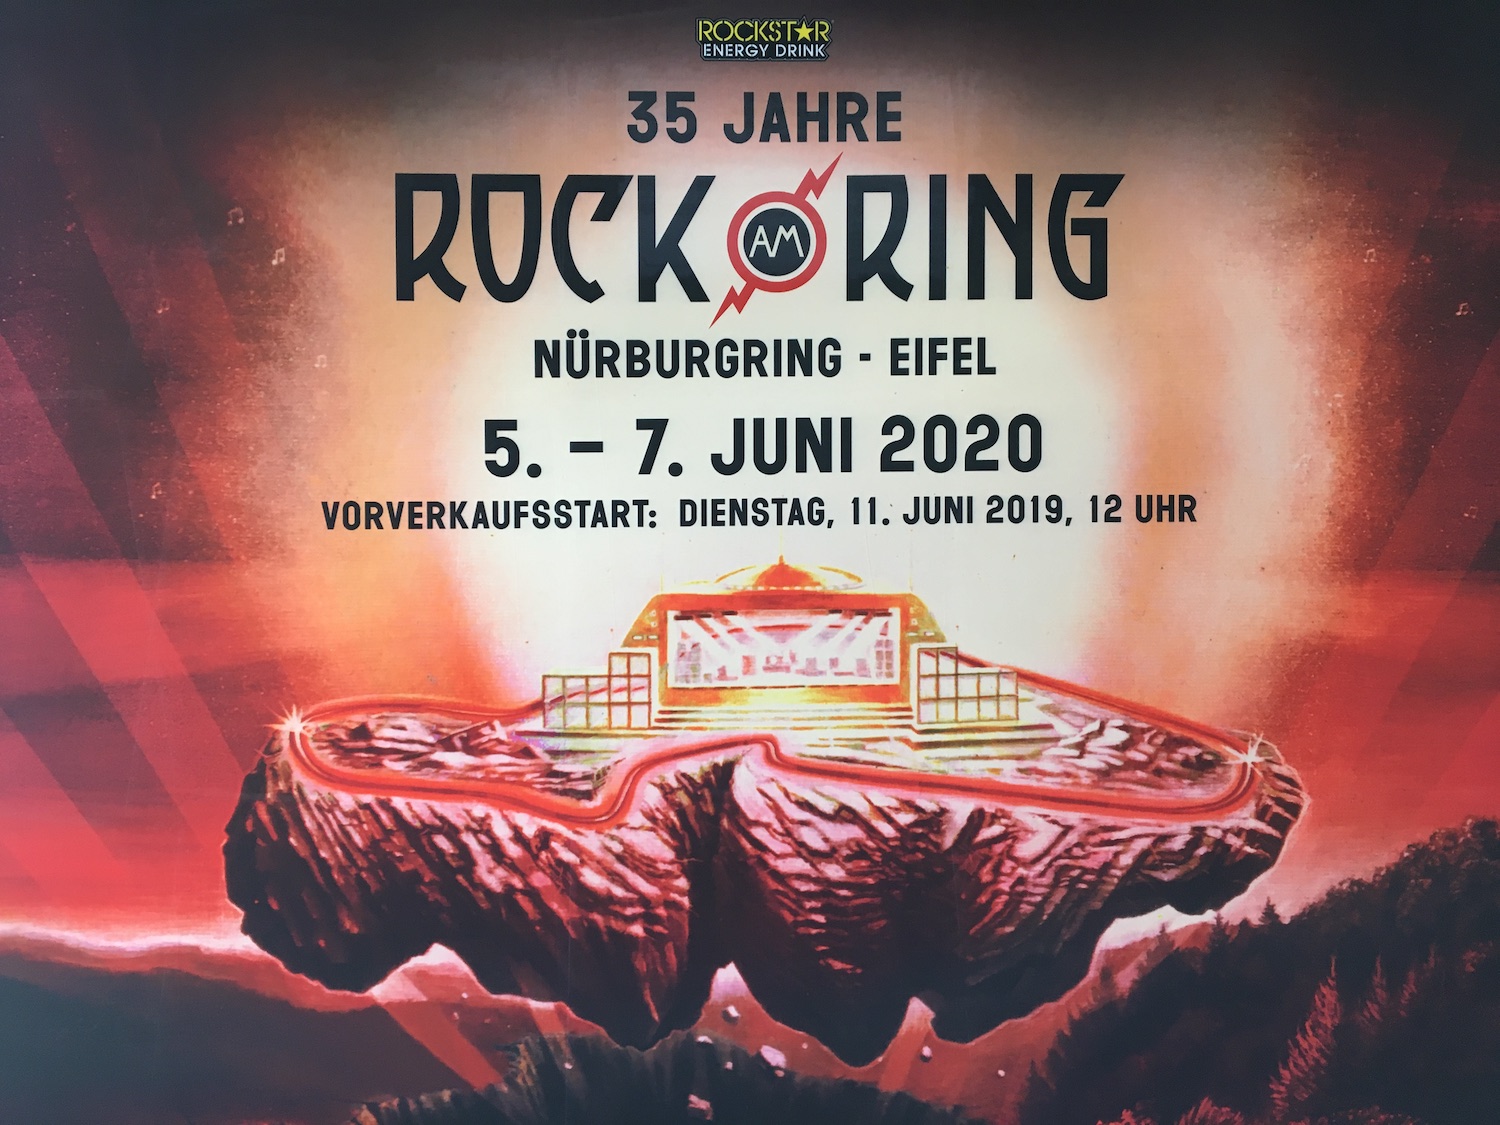 Rock am Ring 2020